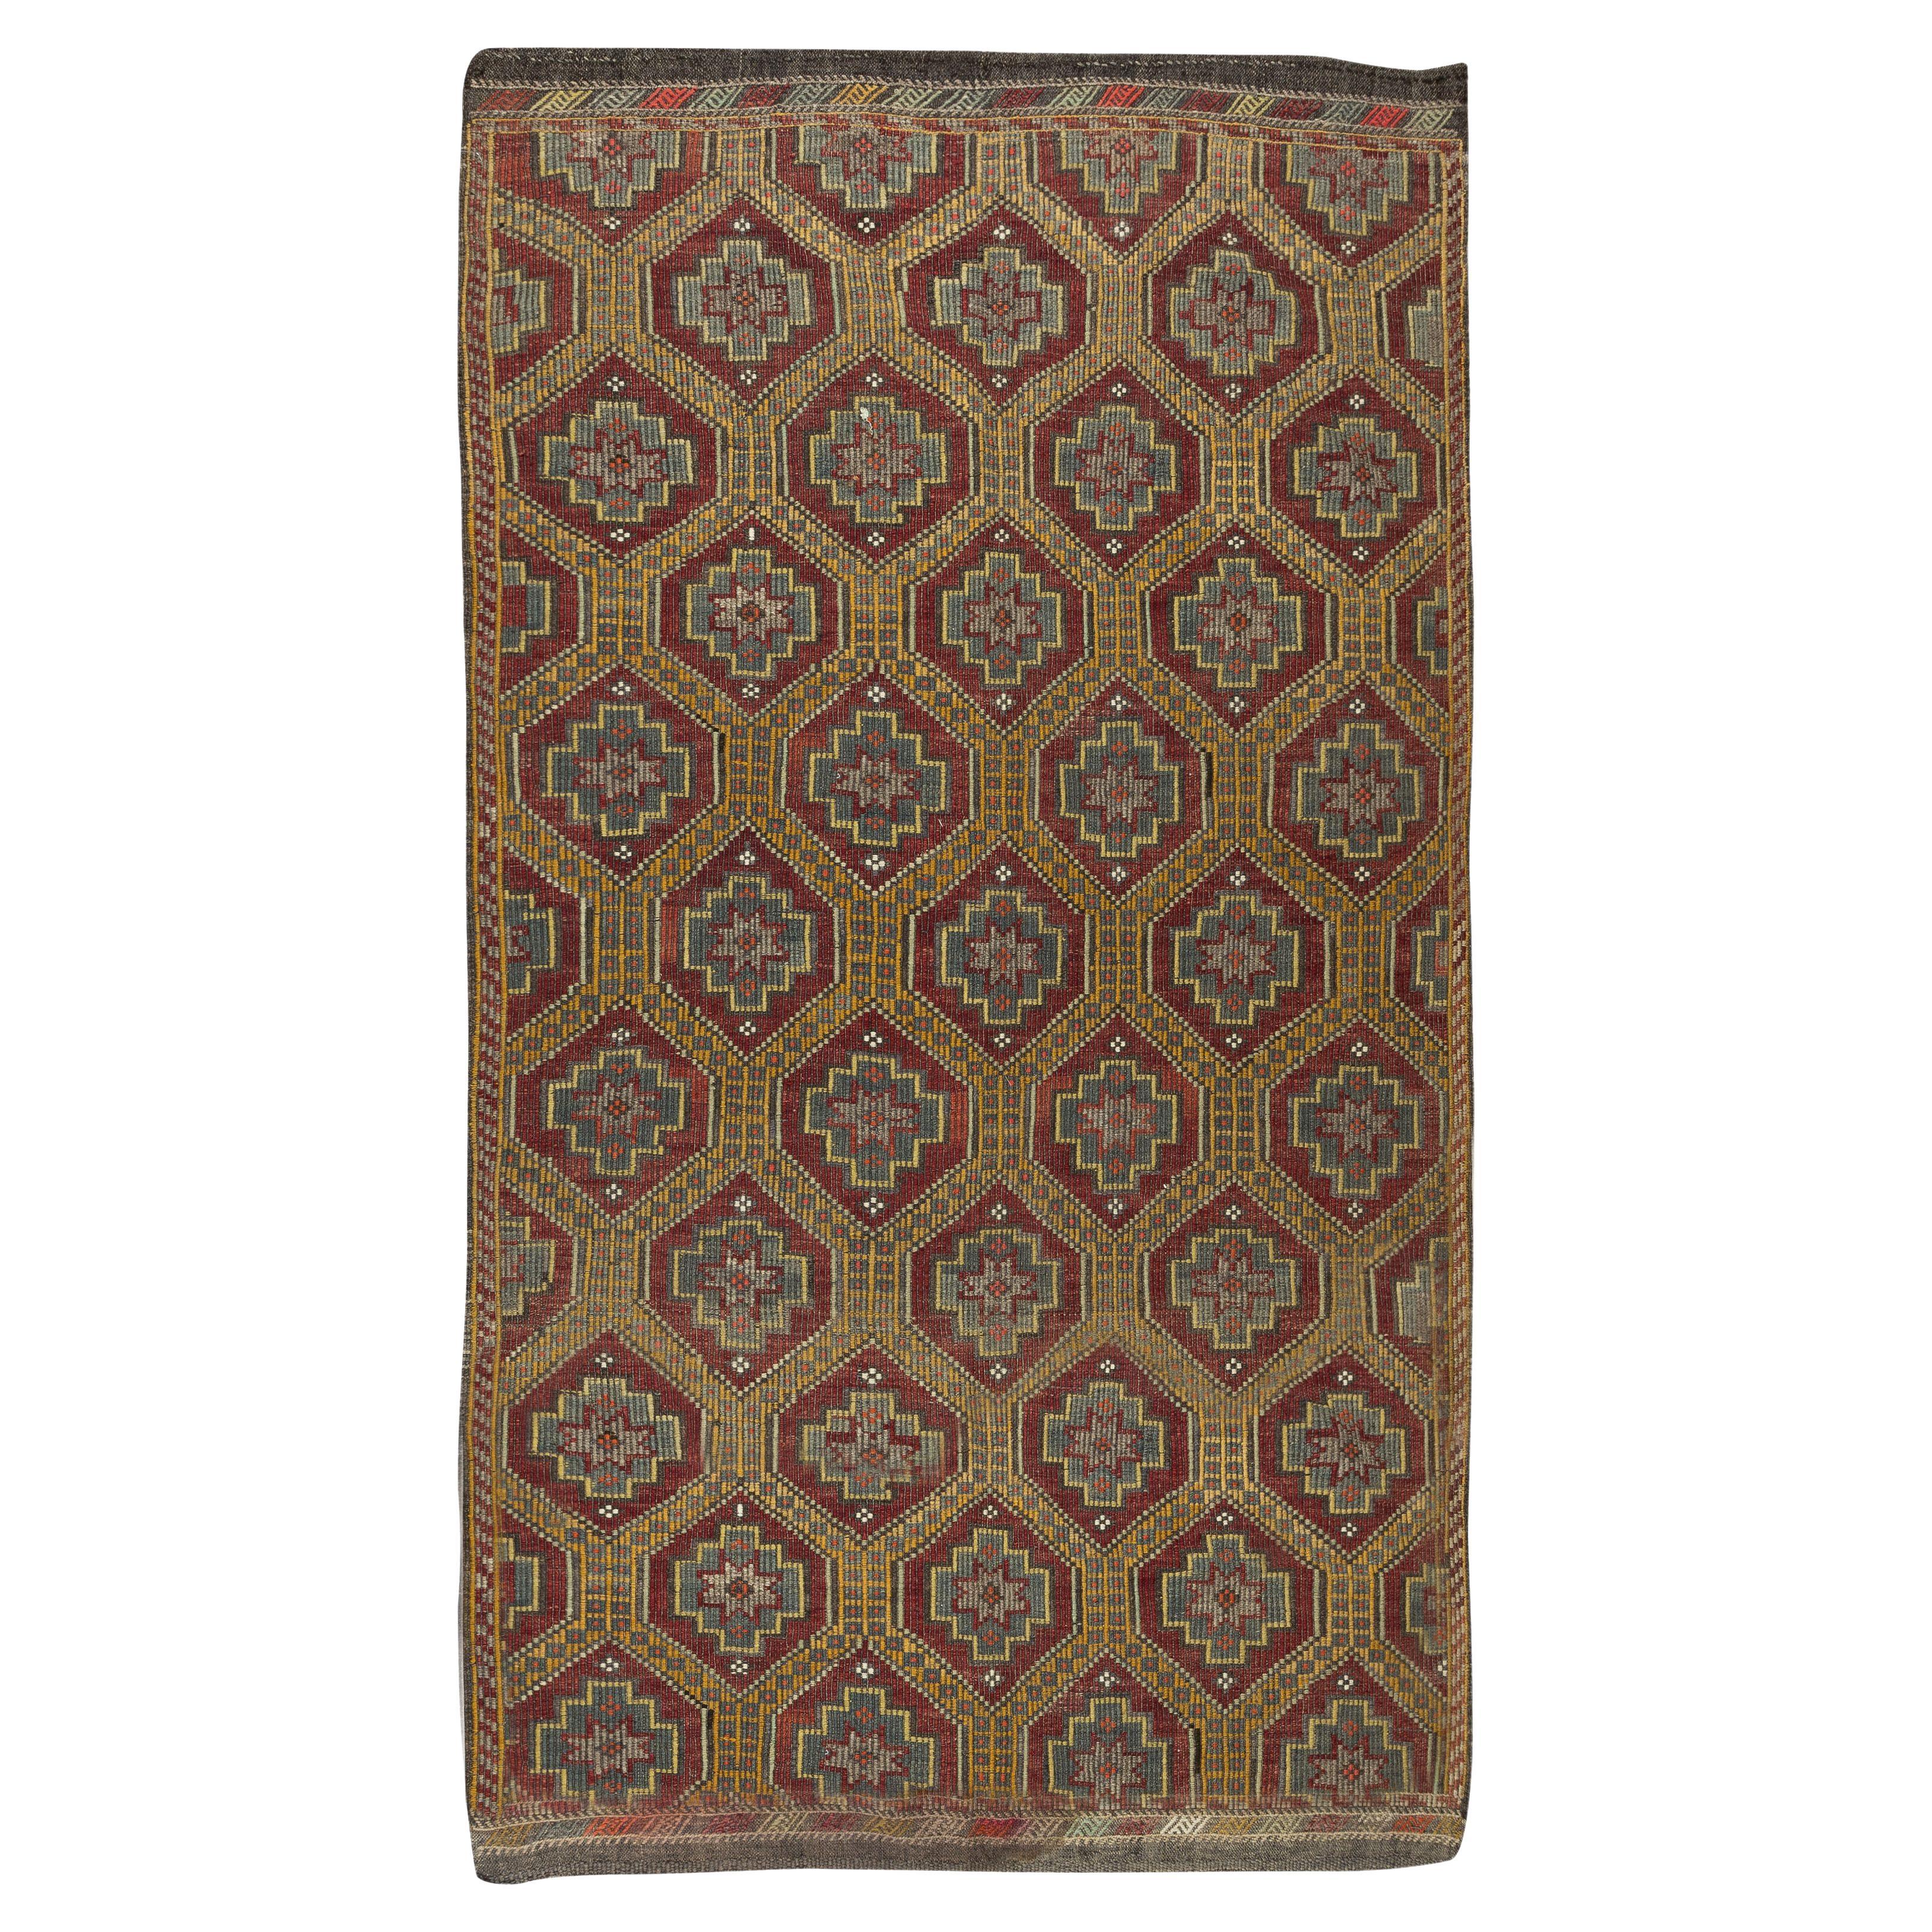 5.5x9.4 Ft Vintage Turkish Jijim Kilim, Floral Pattern Hand-Woven Rug, 100% Wool